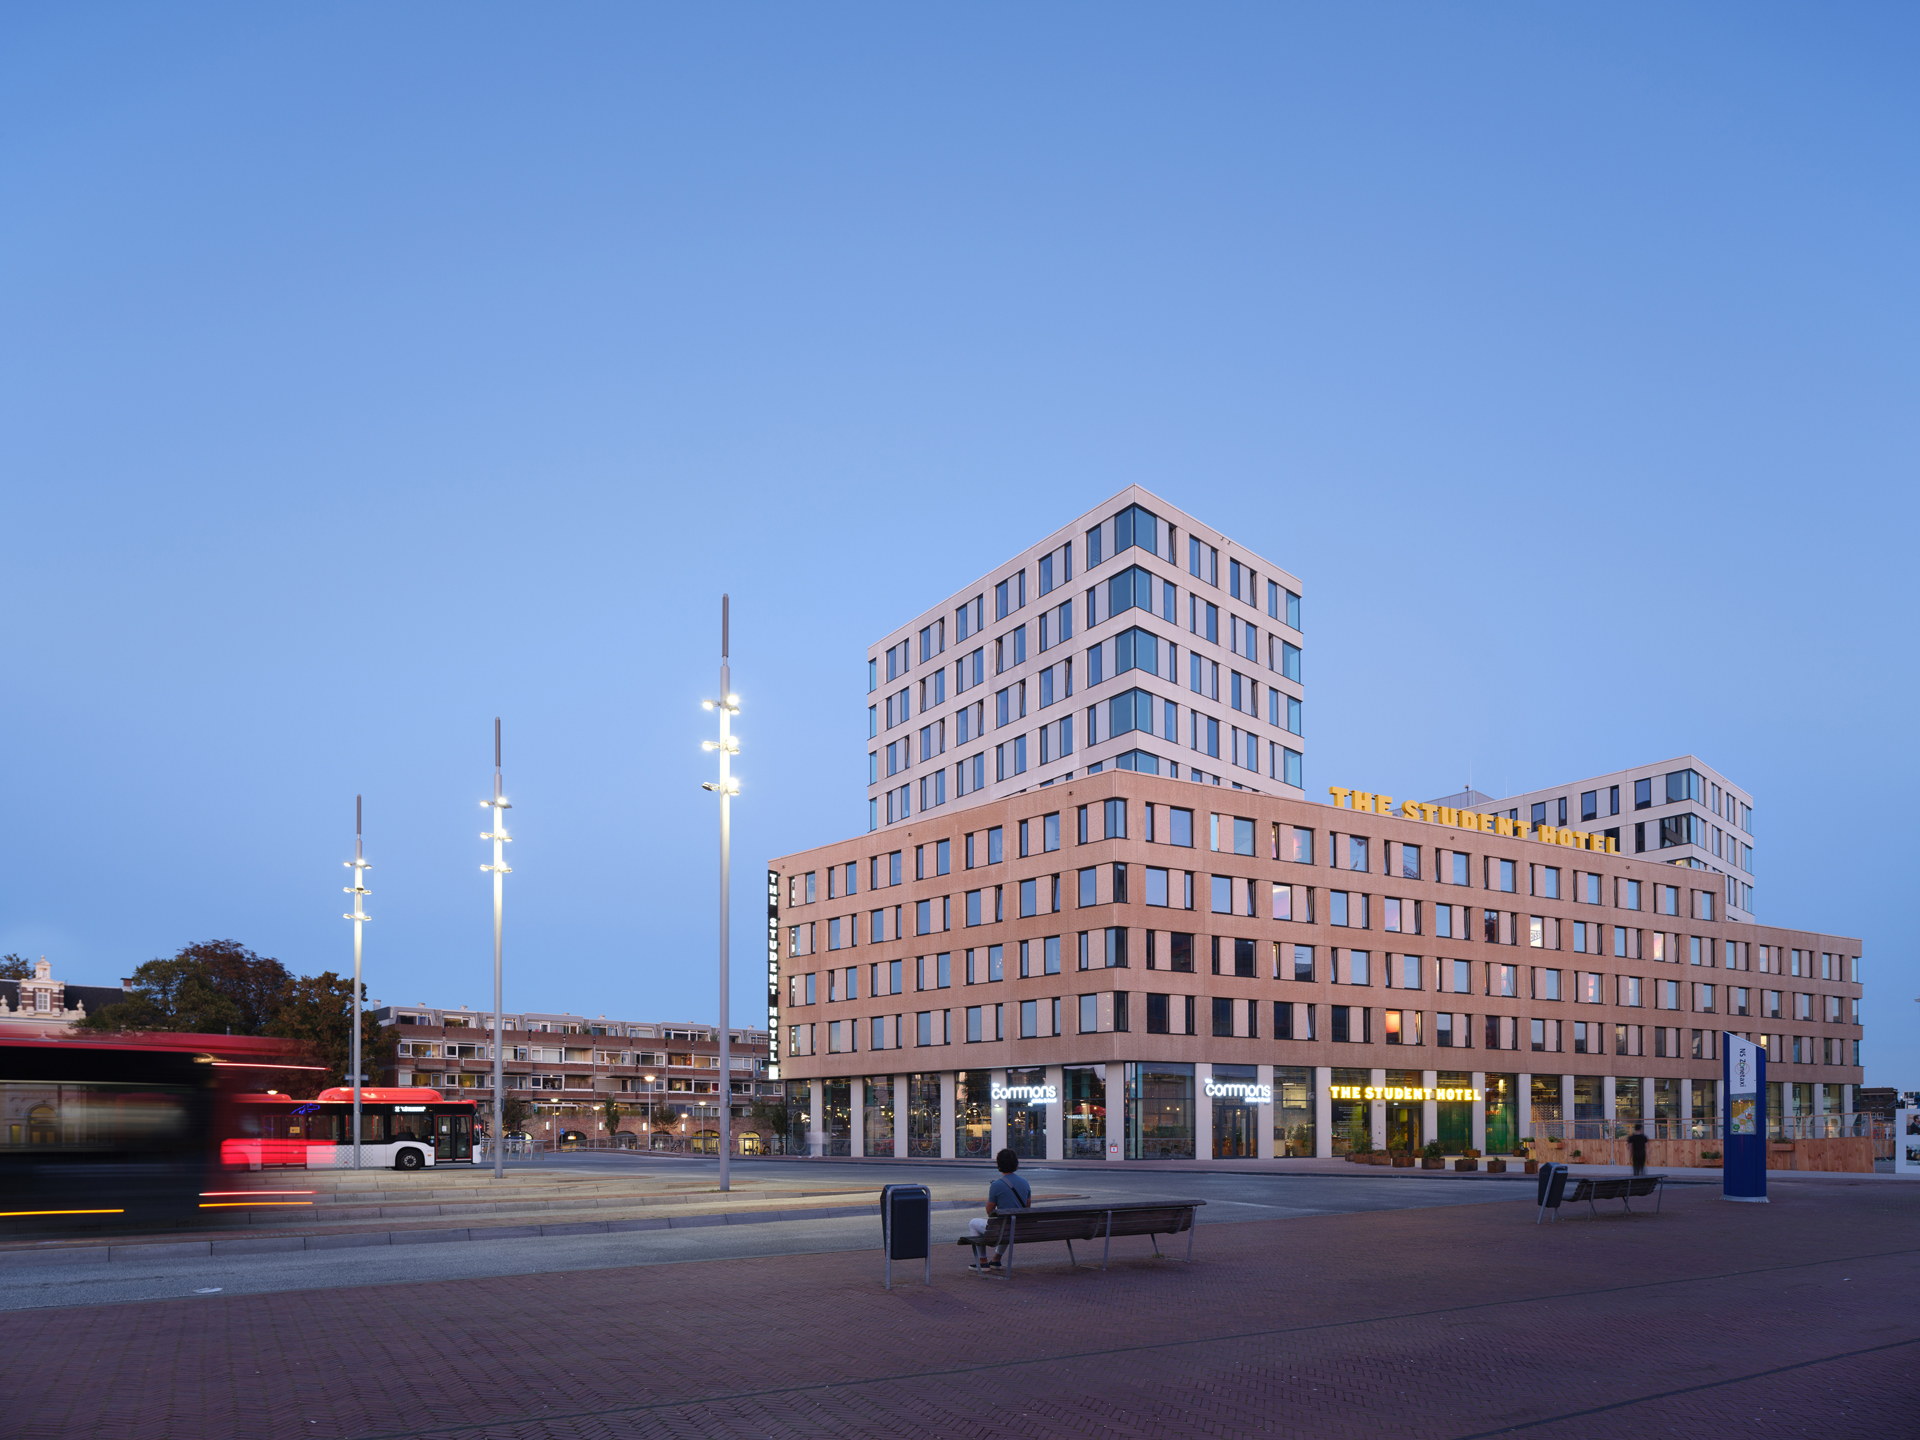 The Student Hotel Delft opens its doors